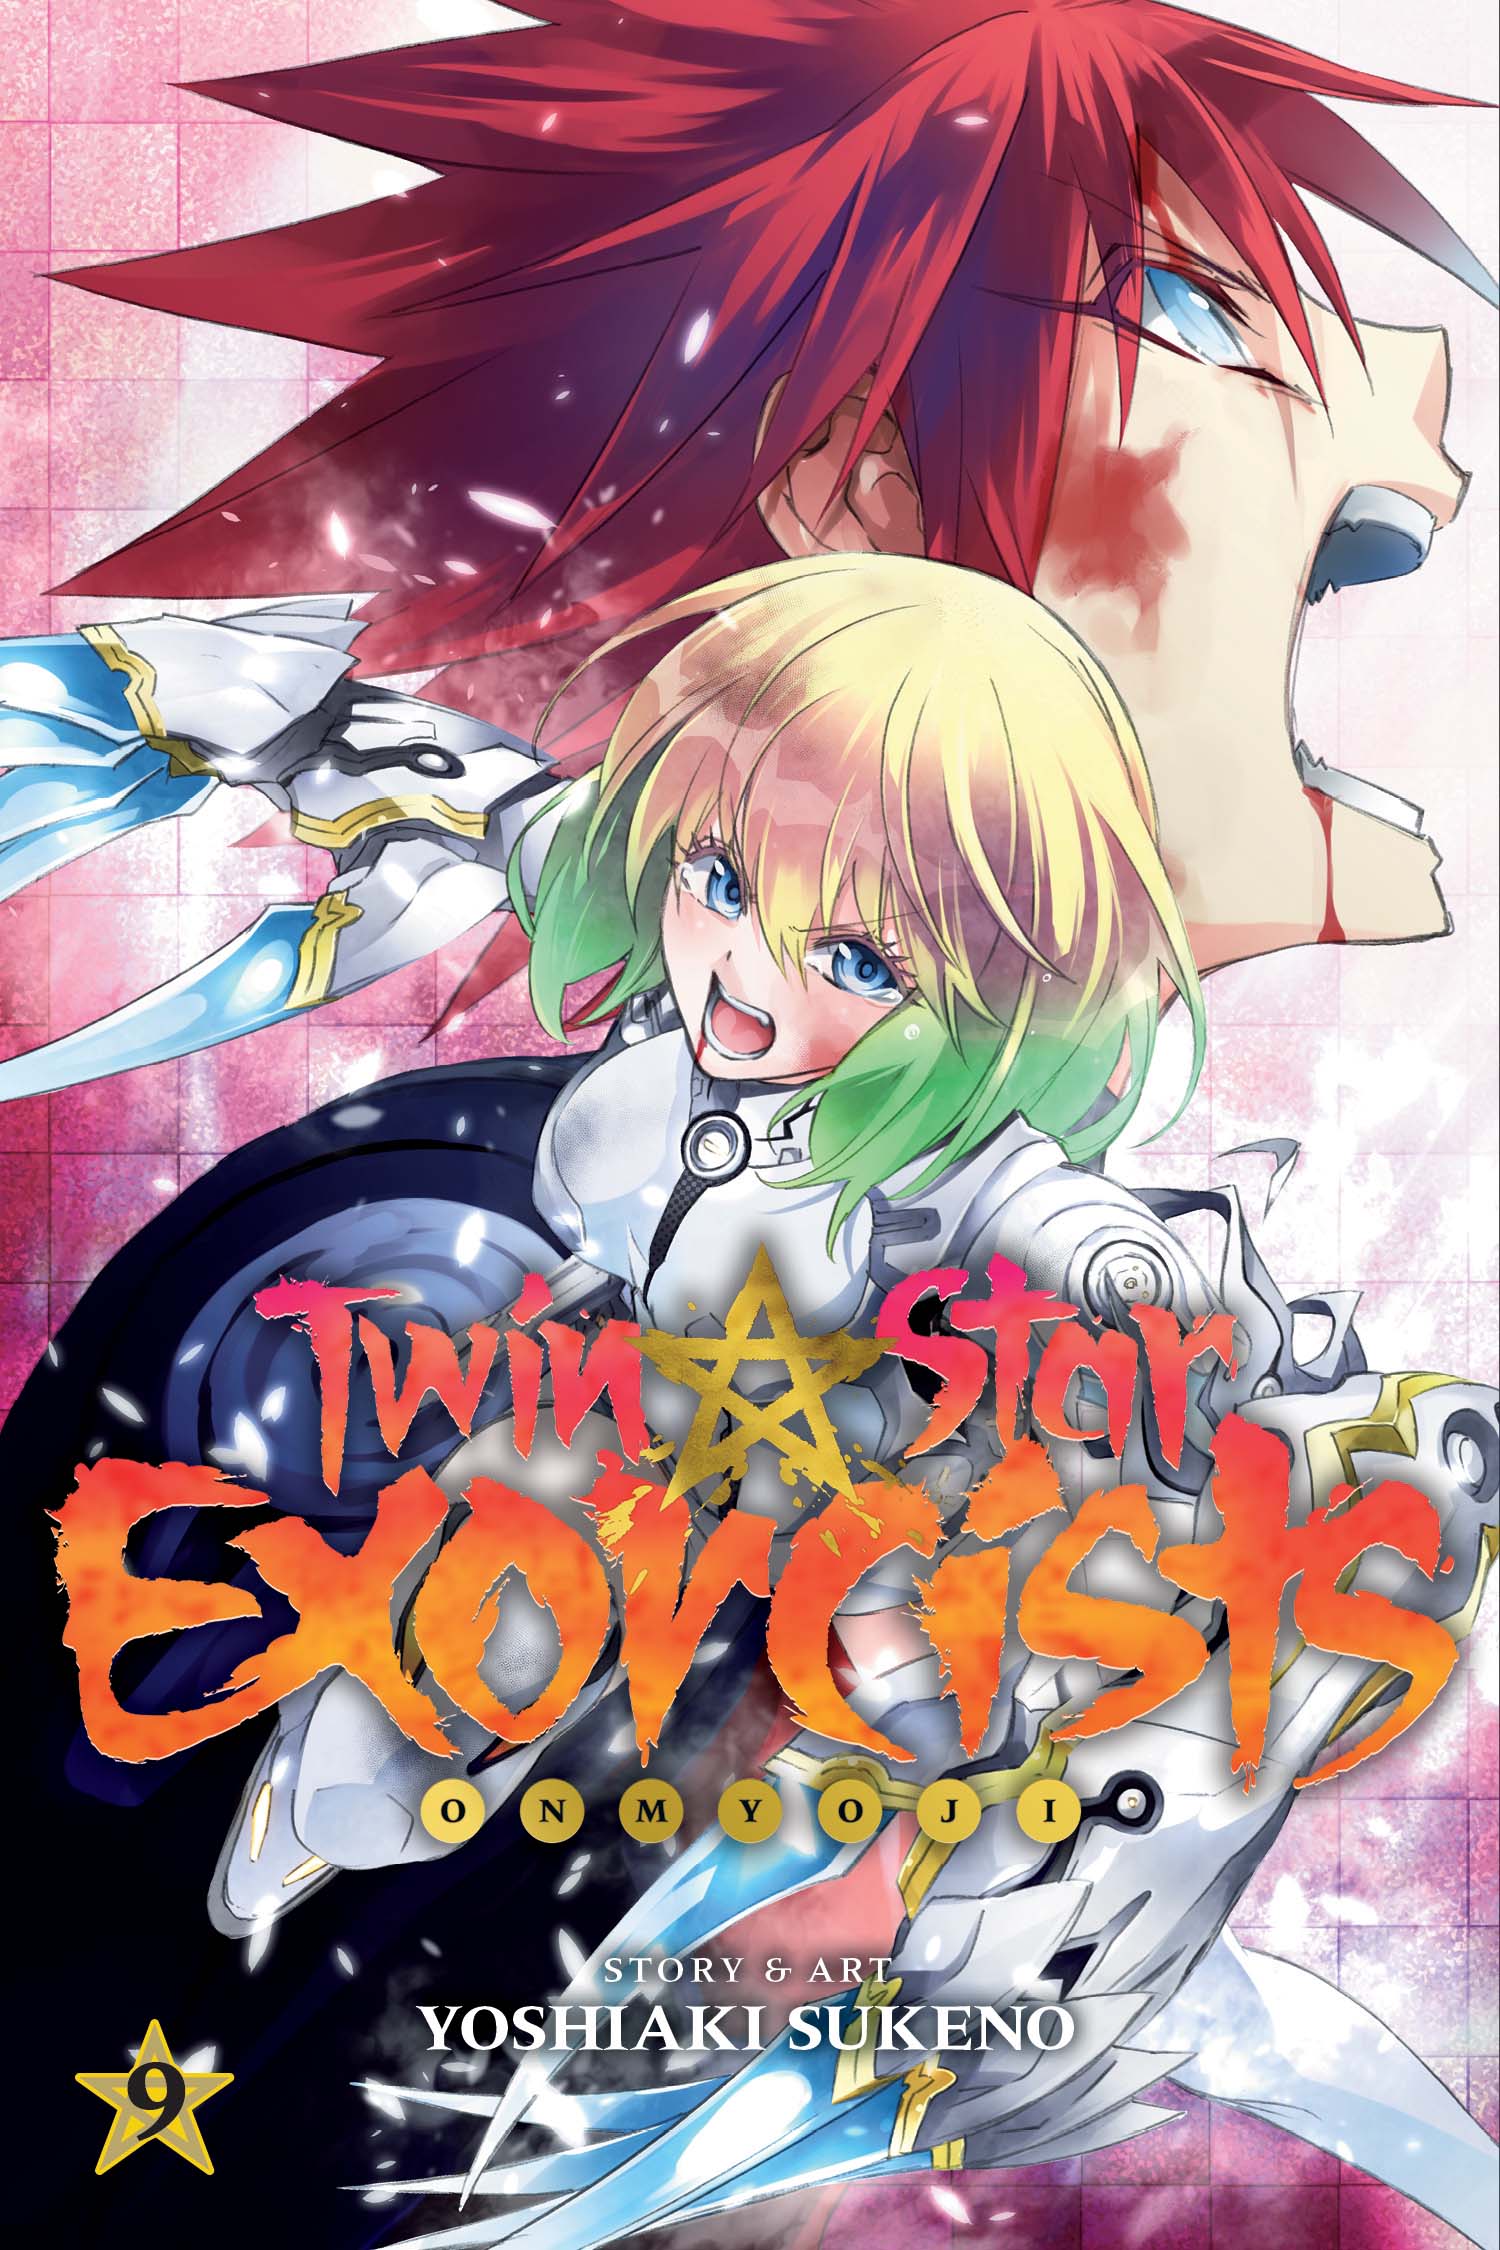 Twin Star Exorcists Vol. 5 - Tokyo Otaku Mode (TOM)